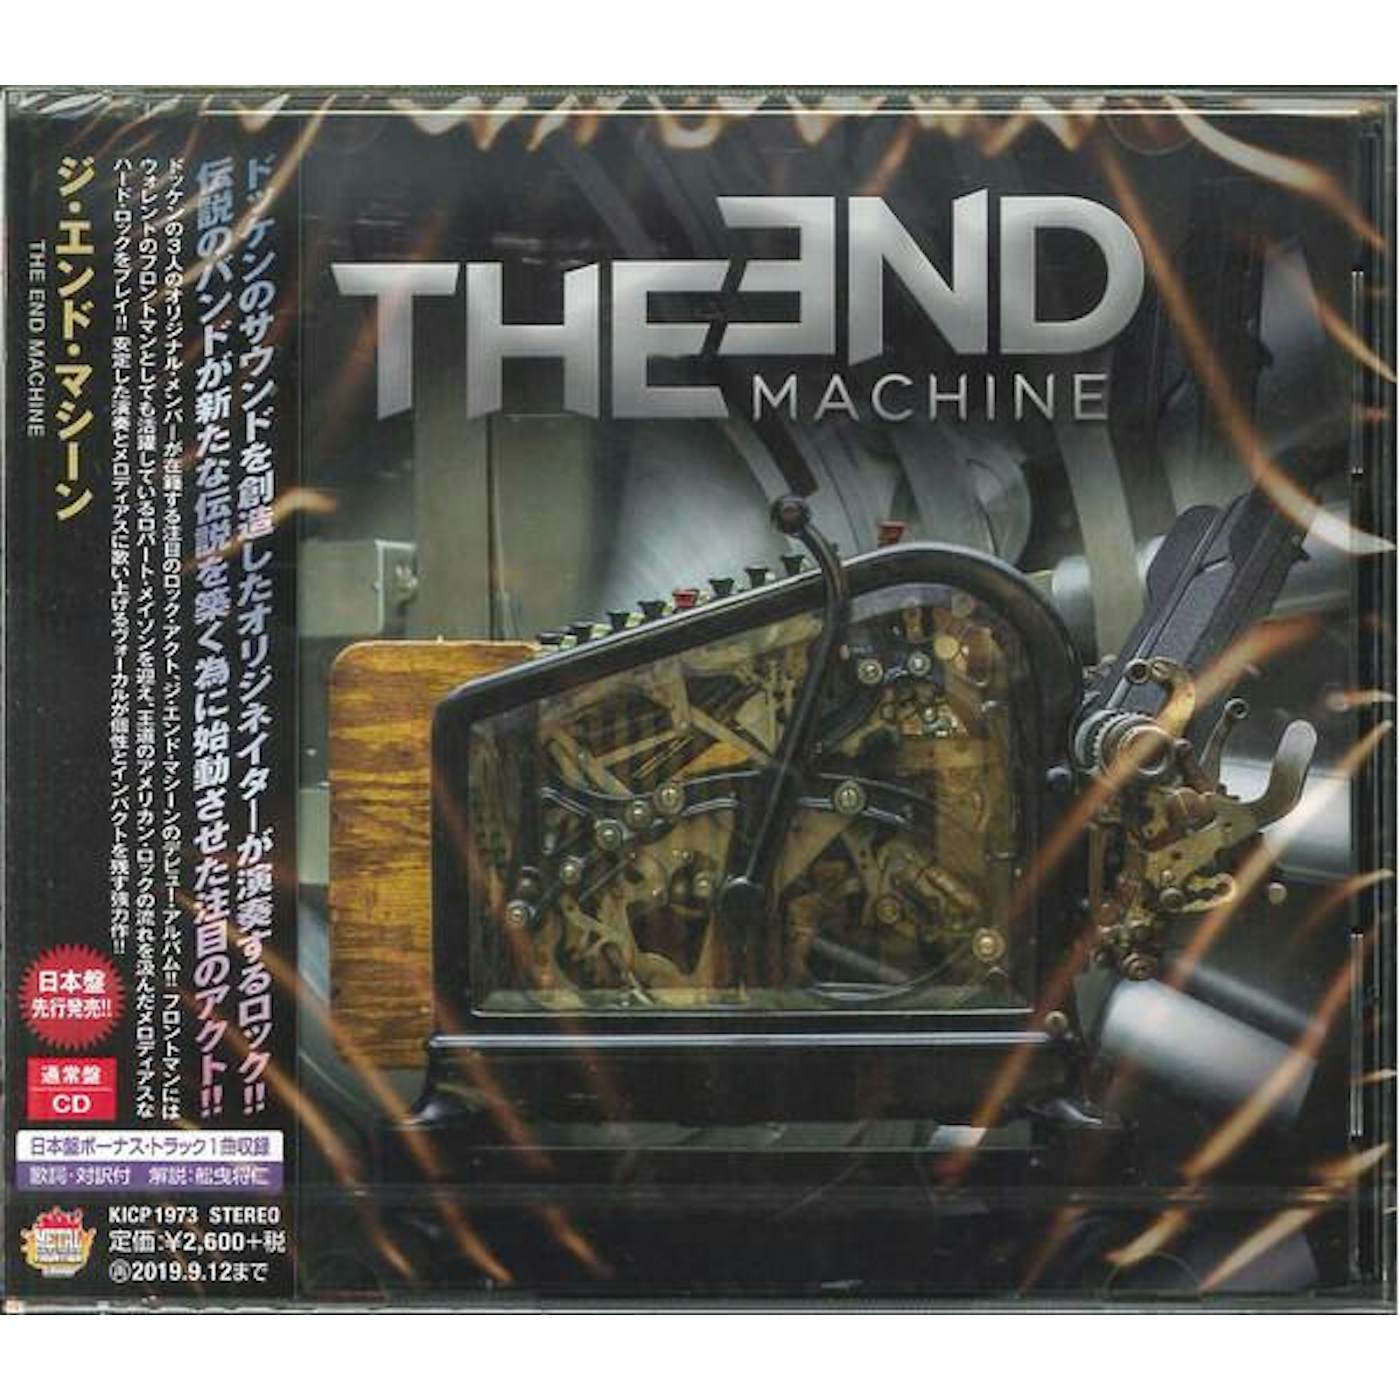 The End Machine CD